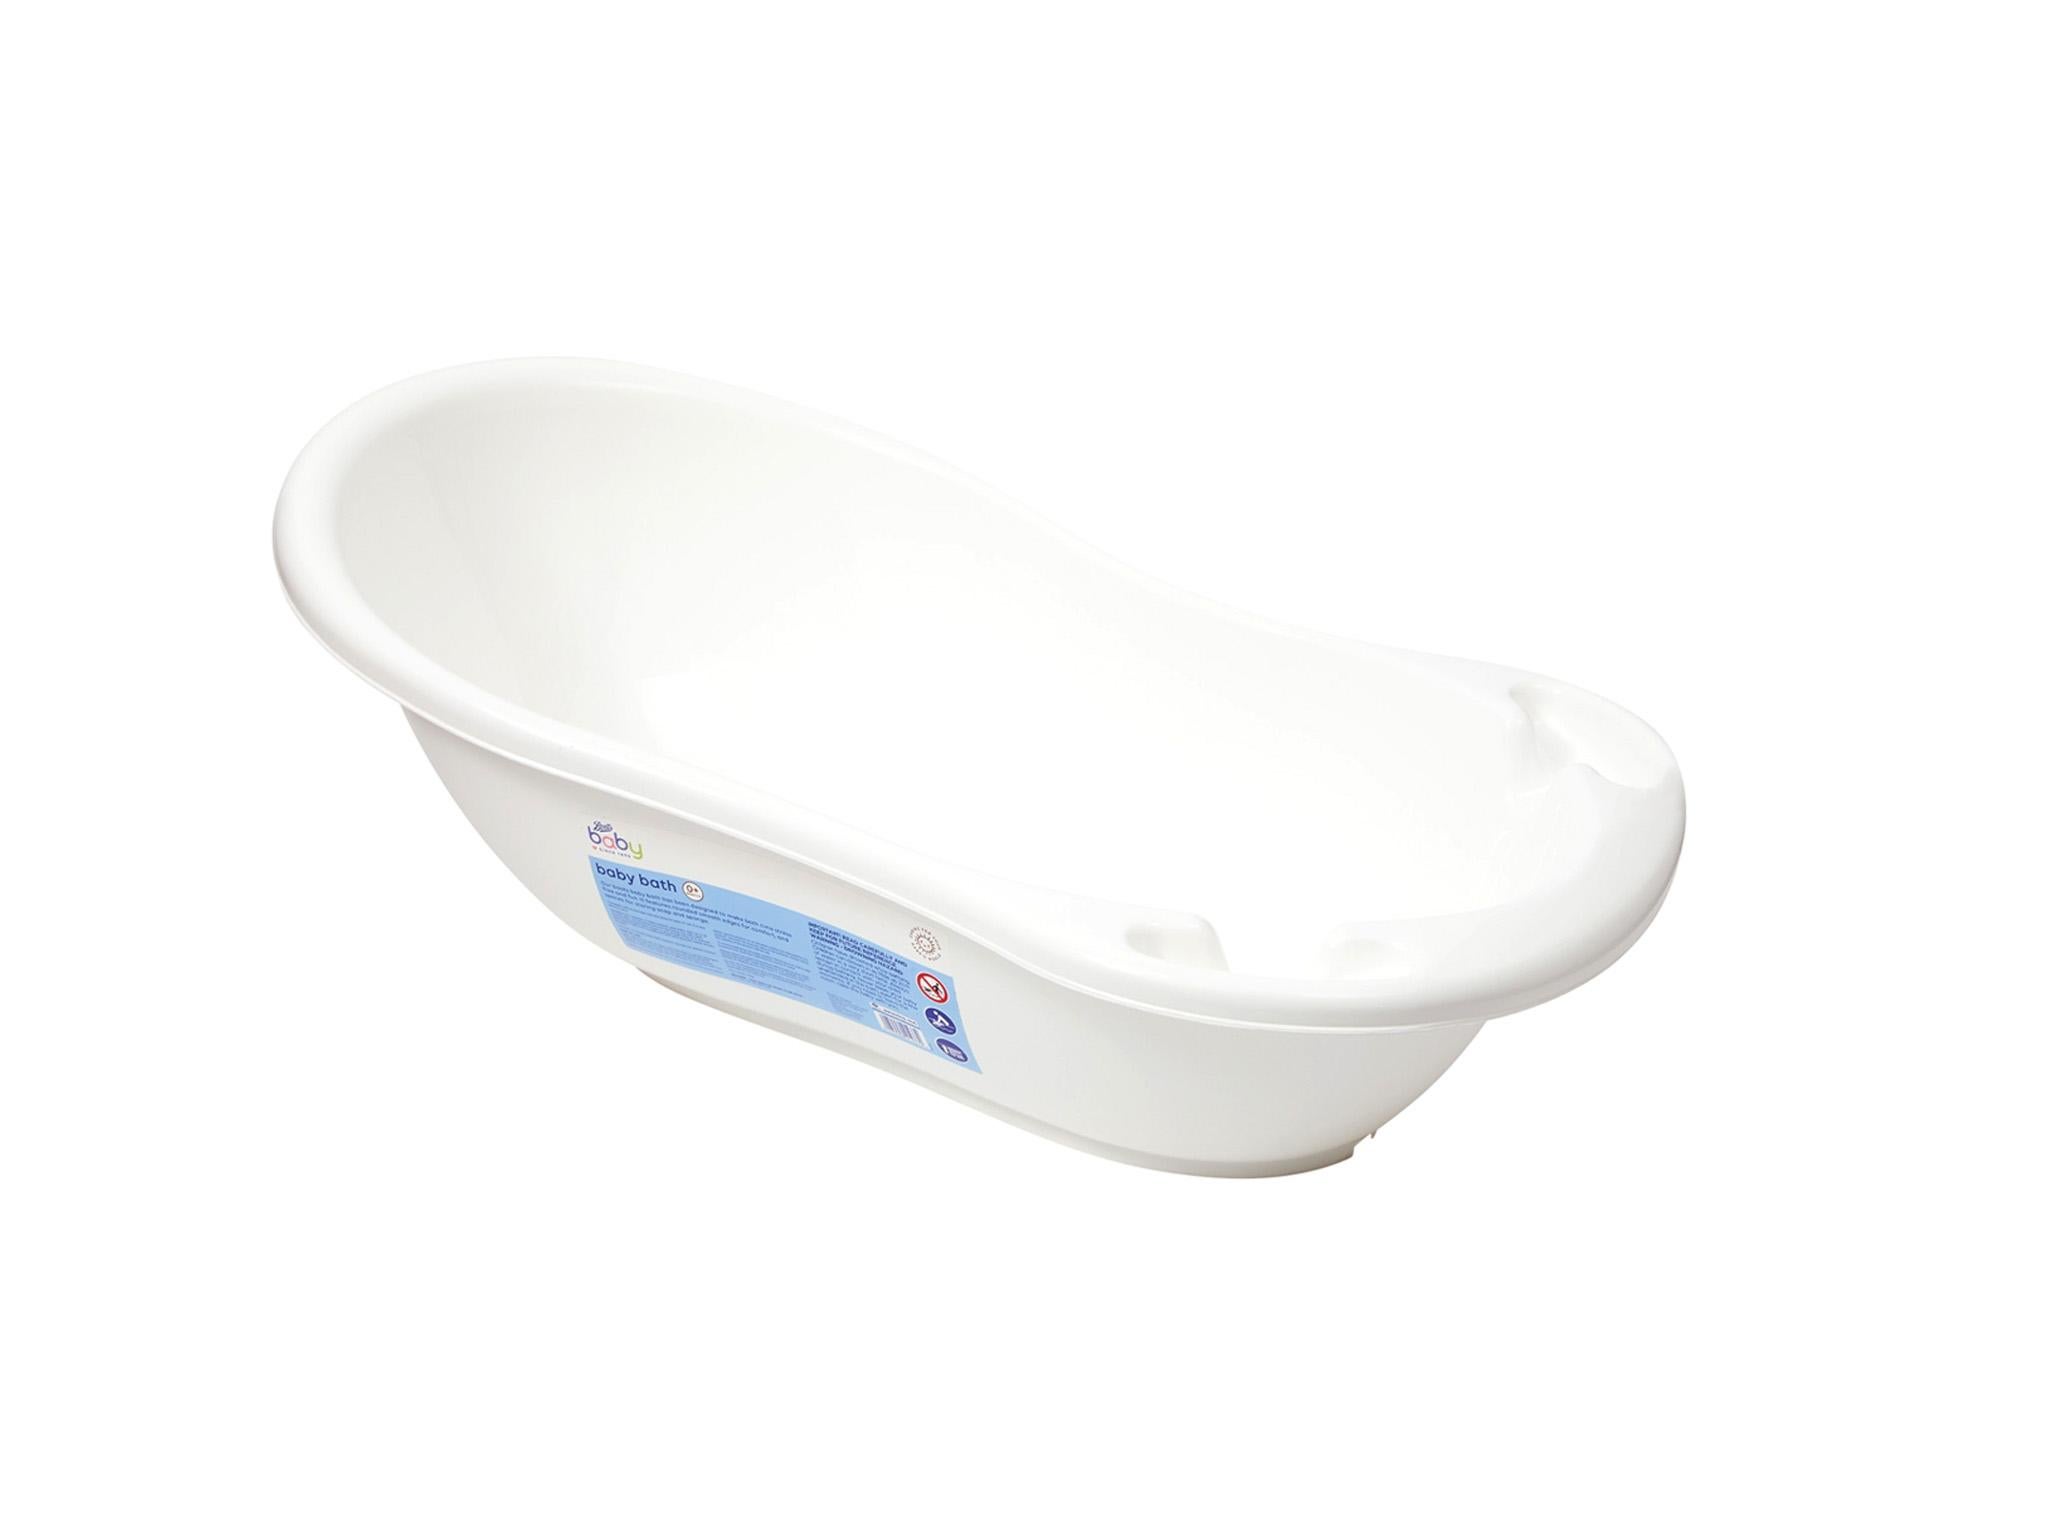 Strata Top & Tail Bowl Baby Bathing Time Home Travel Accessory Bath Tub BNWT 